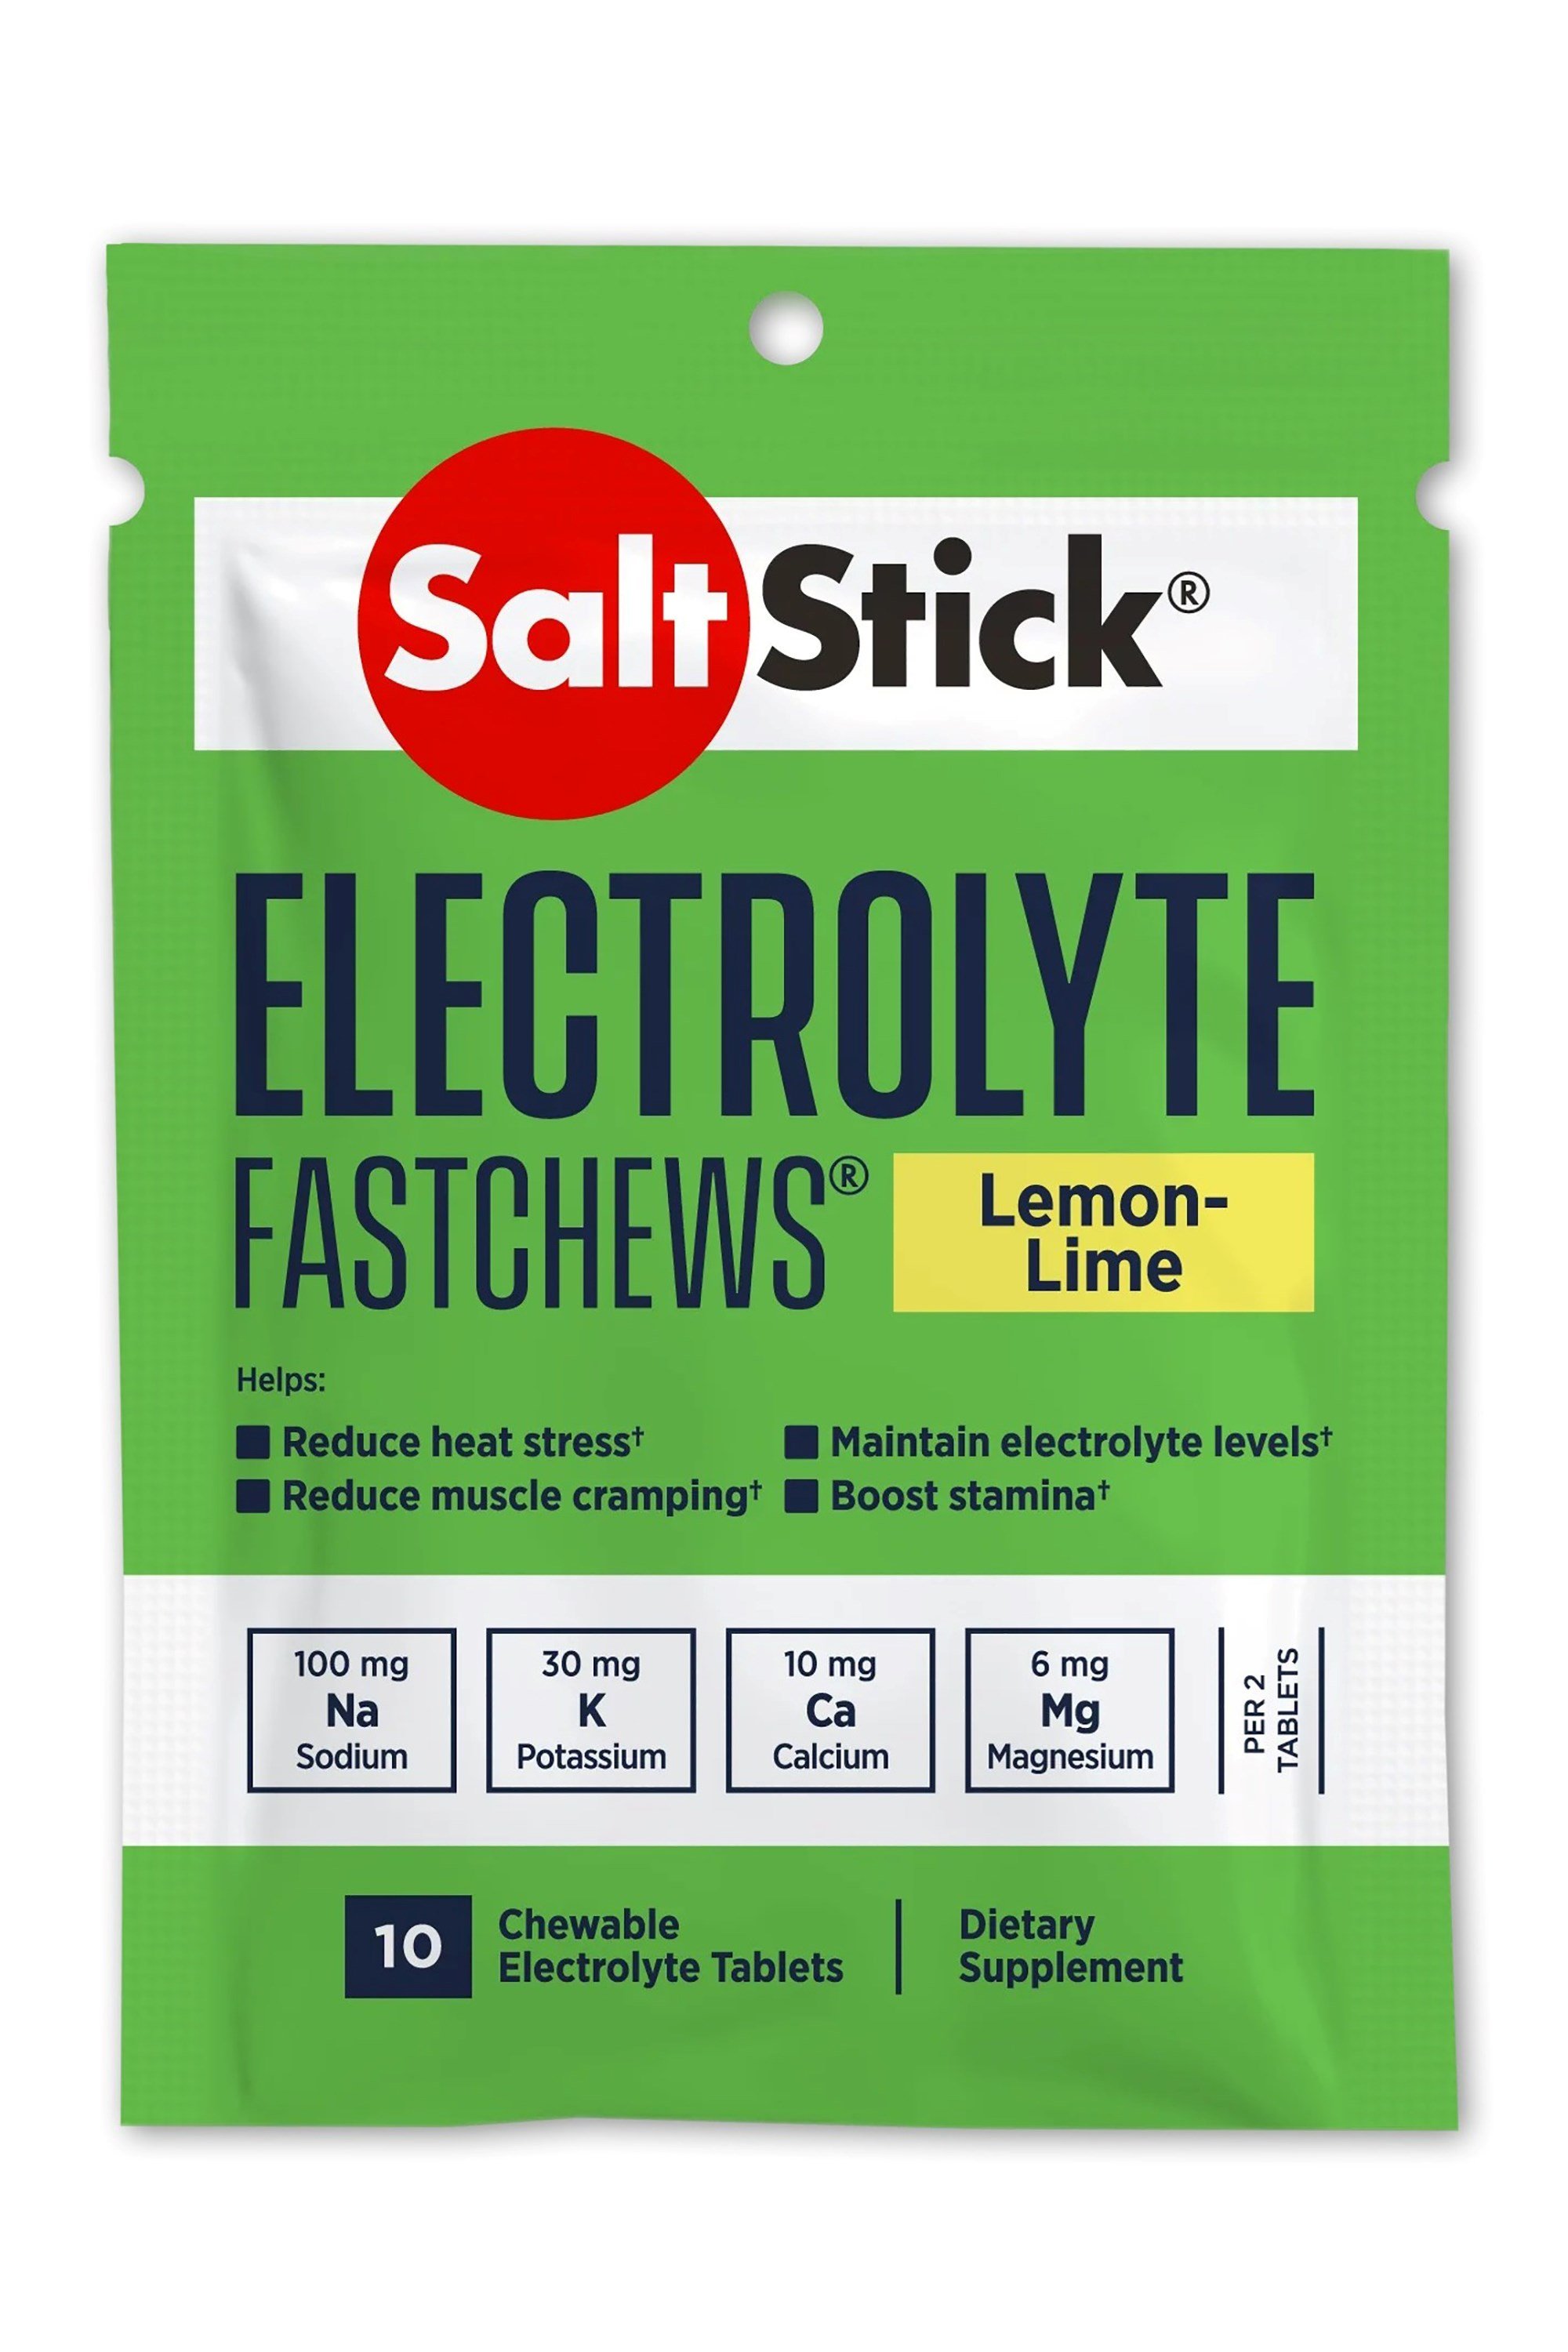 120 Electrolyte FastChews Chewable Tablets -